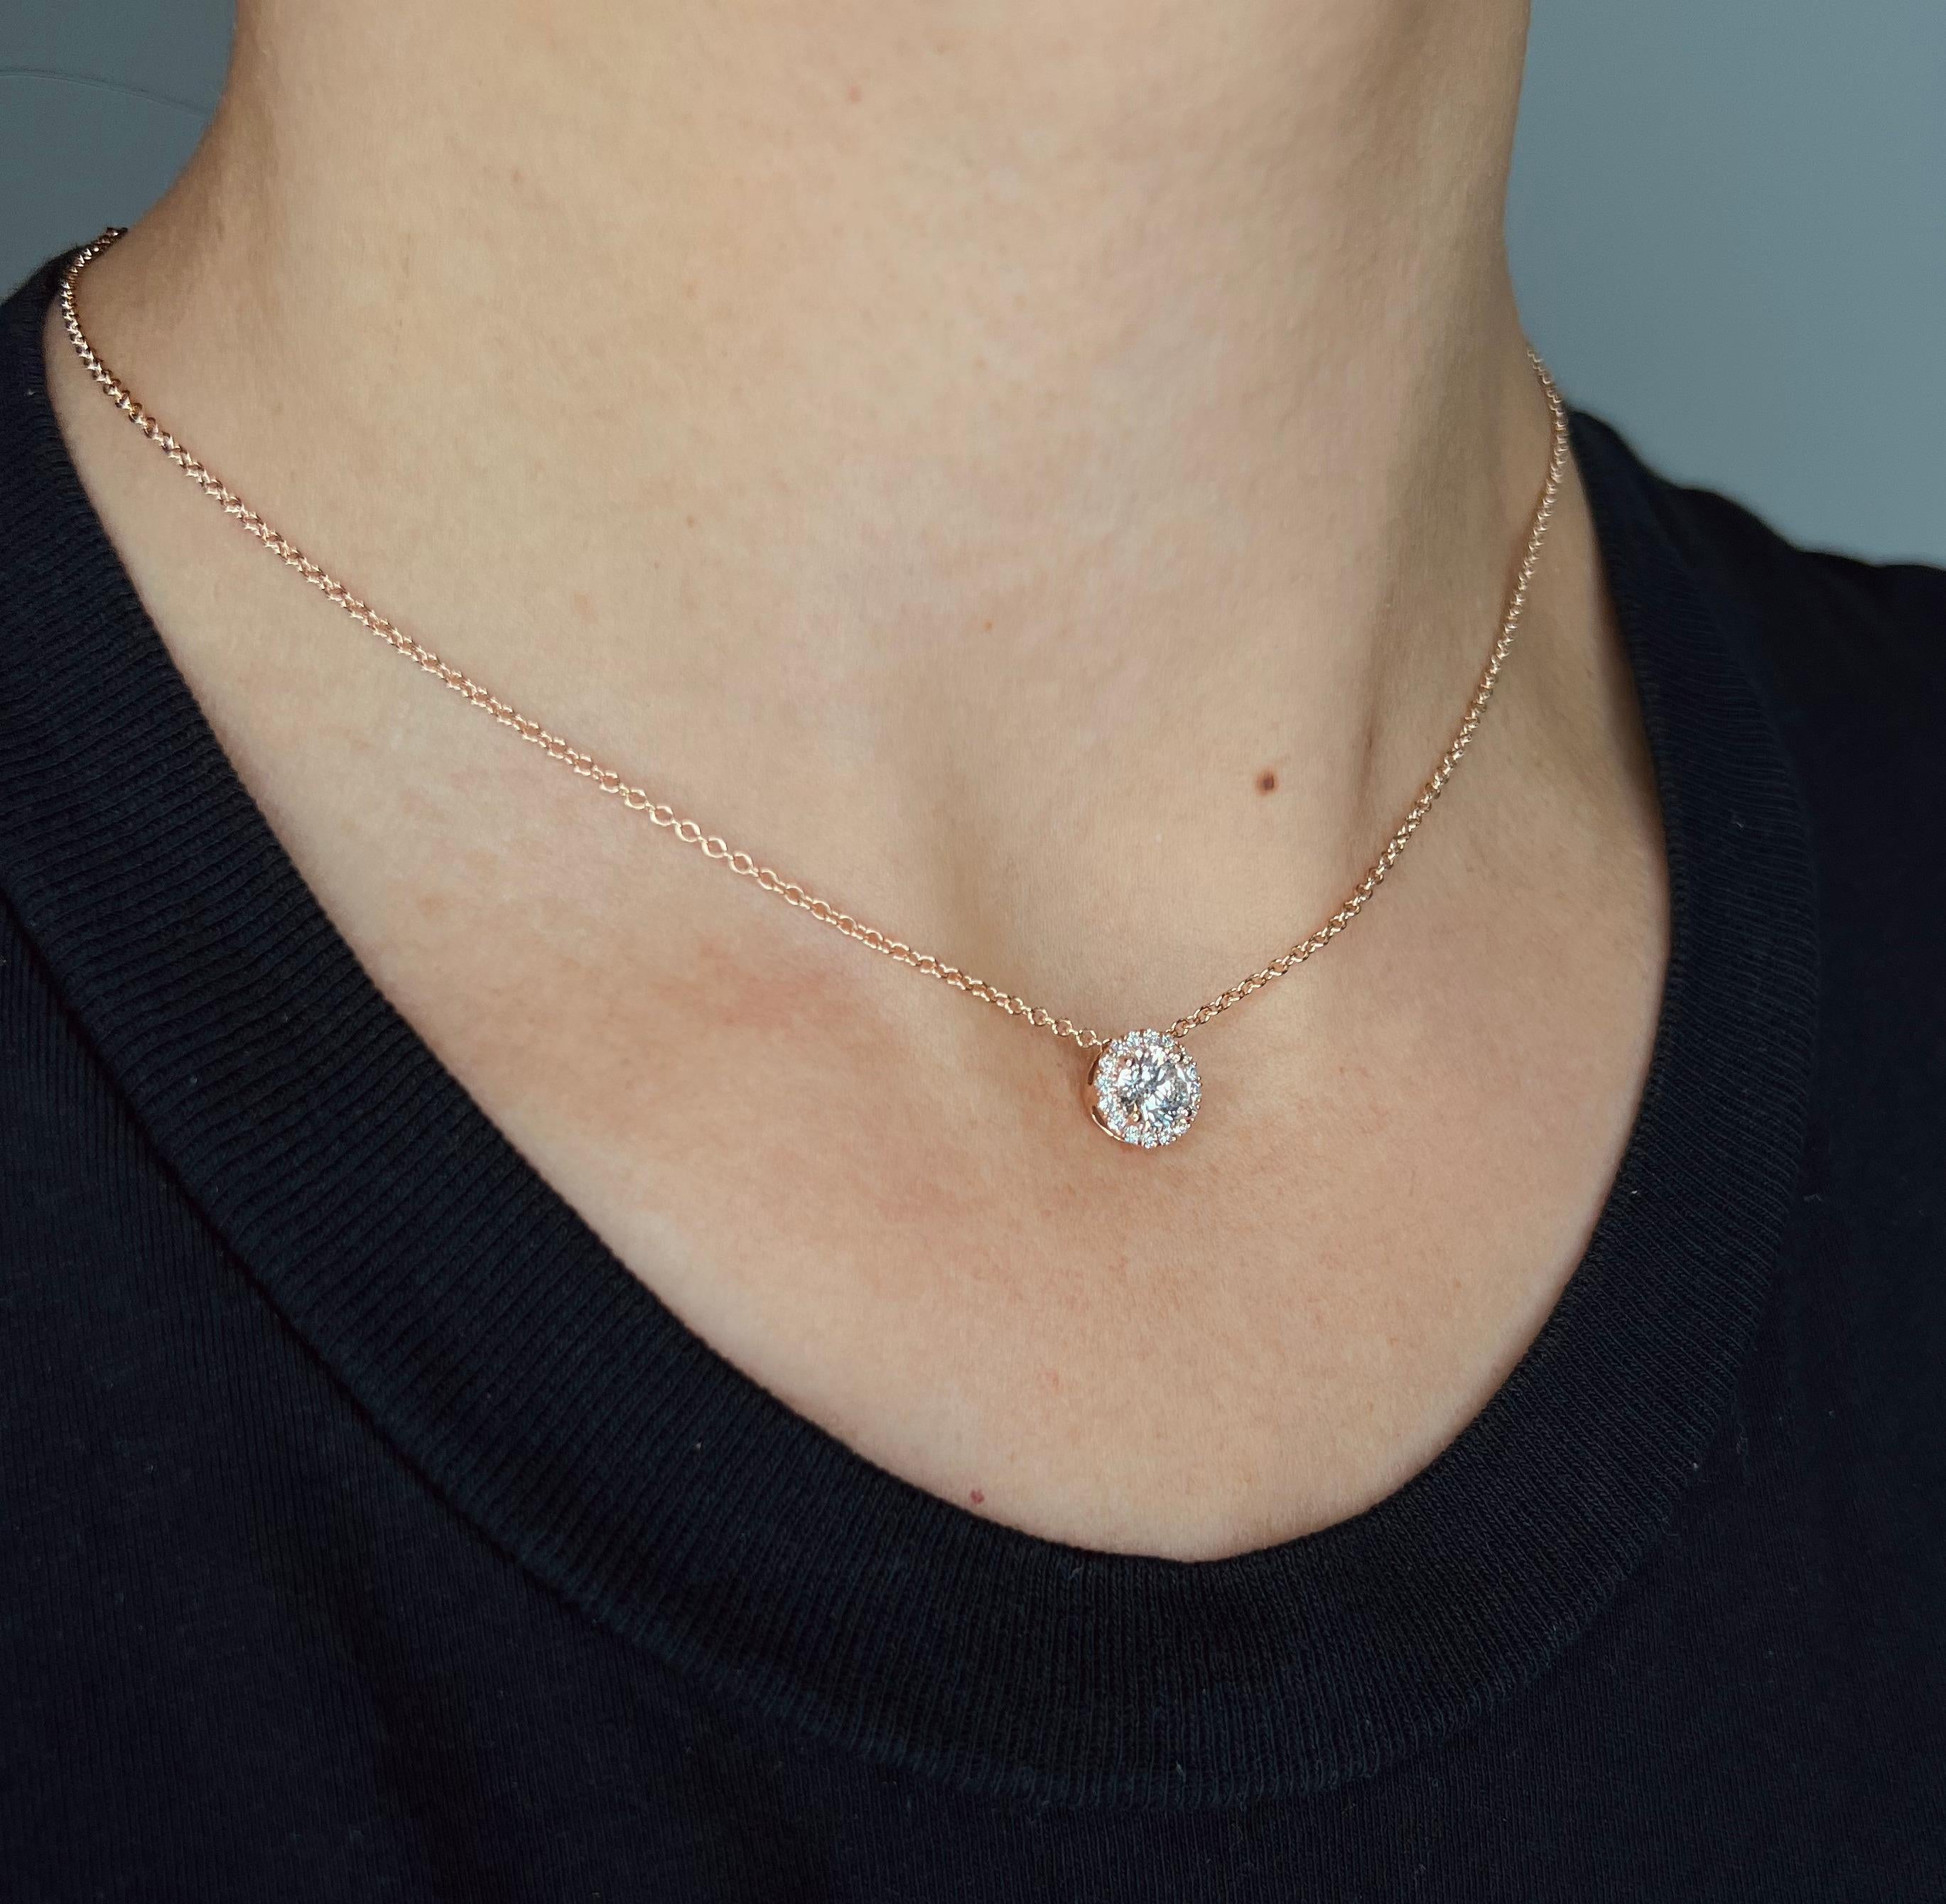 Women's or Men's 14k Rose Gold 1.15 Carat Round Cut Diamond Solitaire Pendant Necklace For Sale